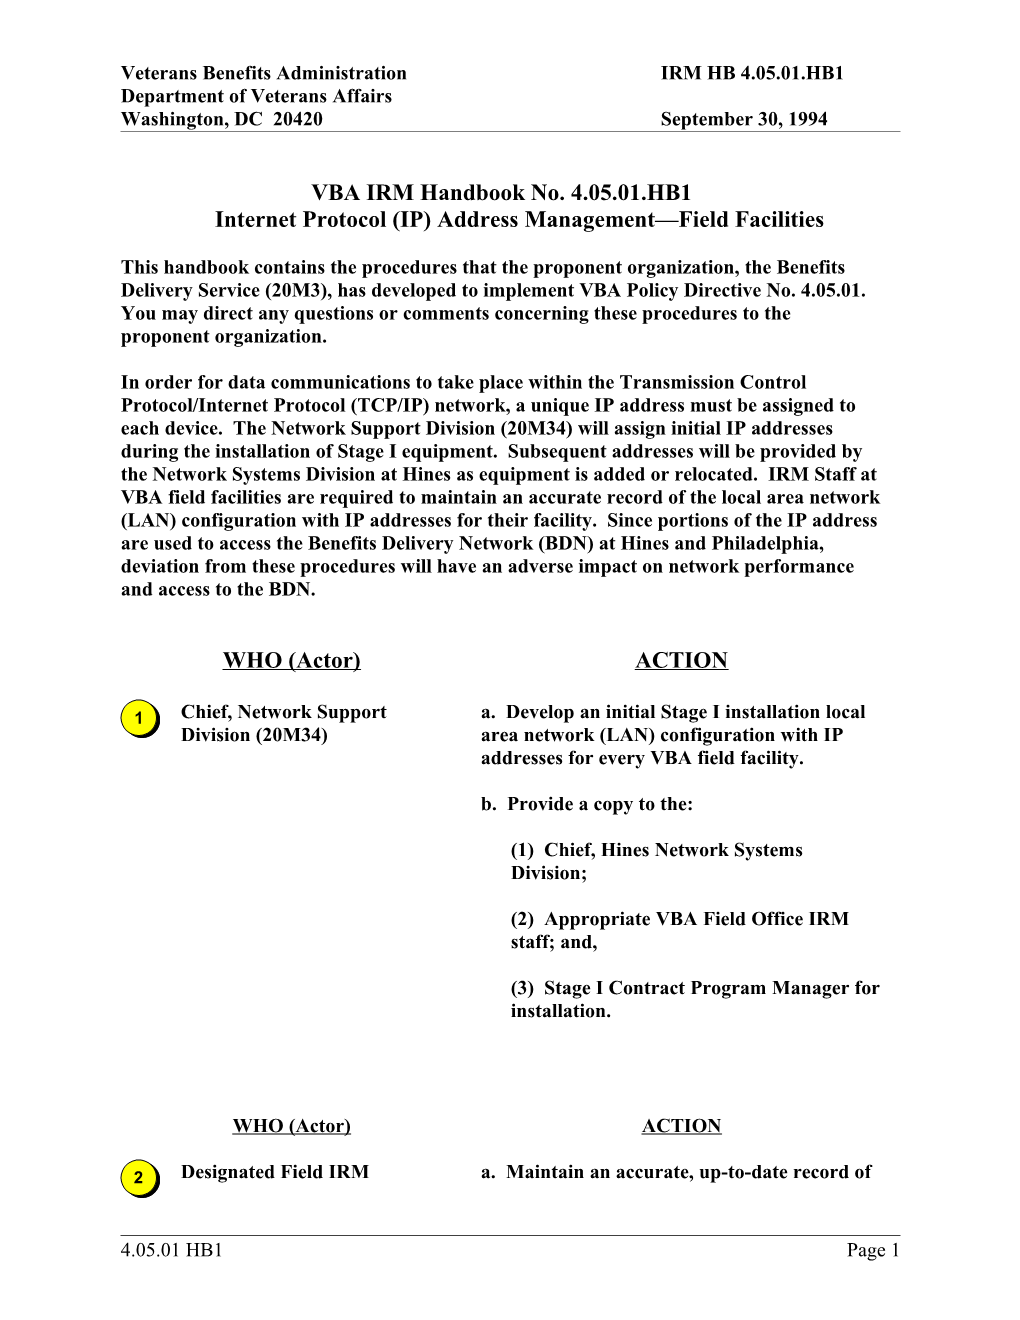 VBA IRM Handbook No. 4.05.01.HB1